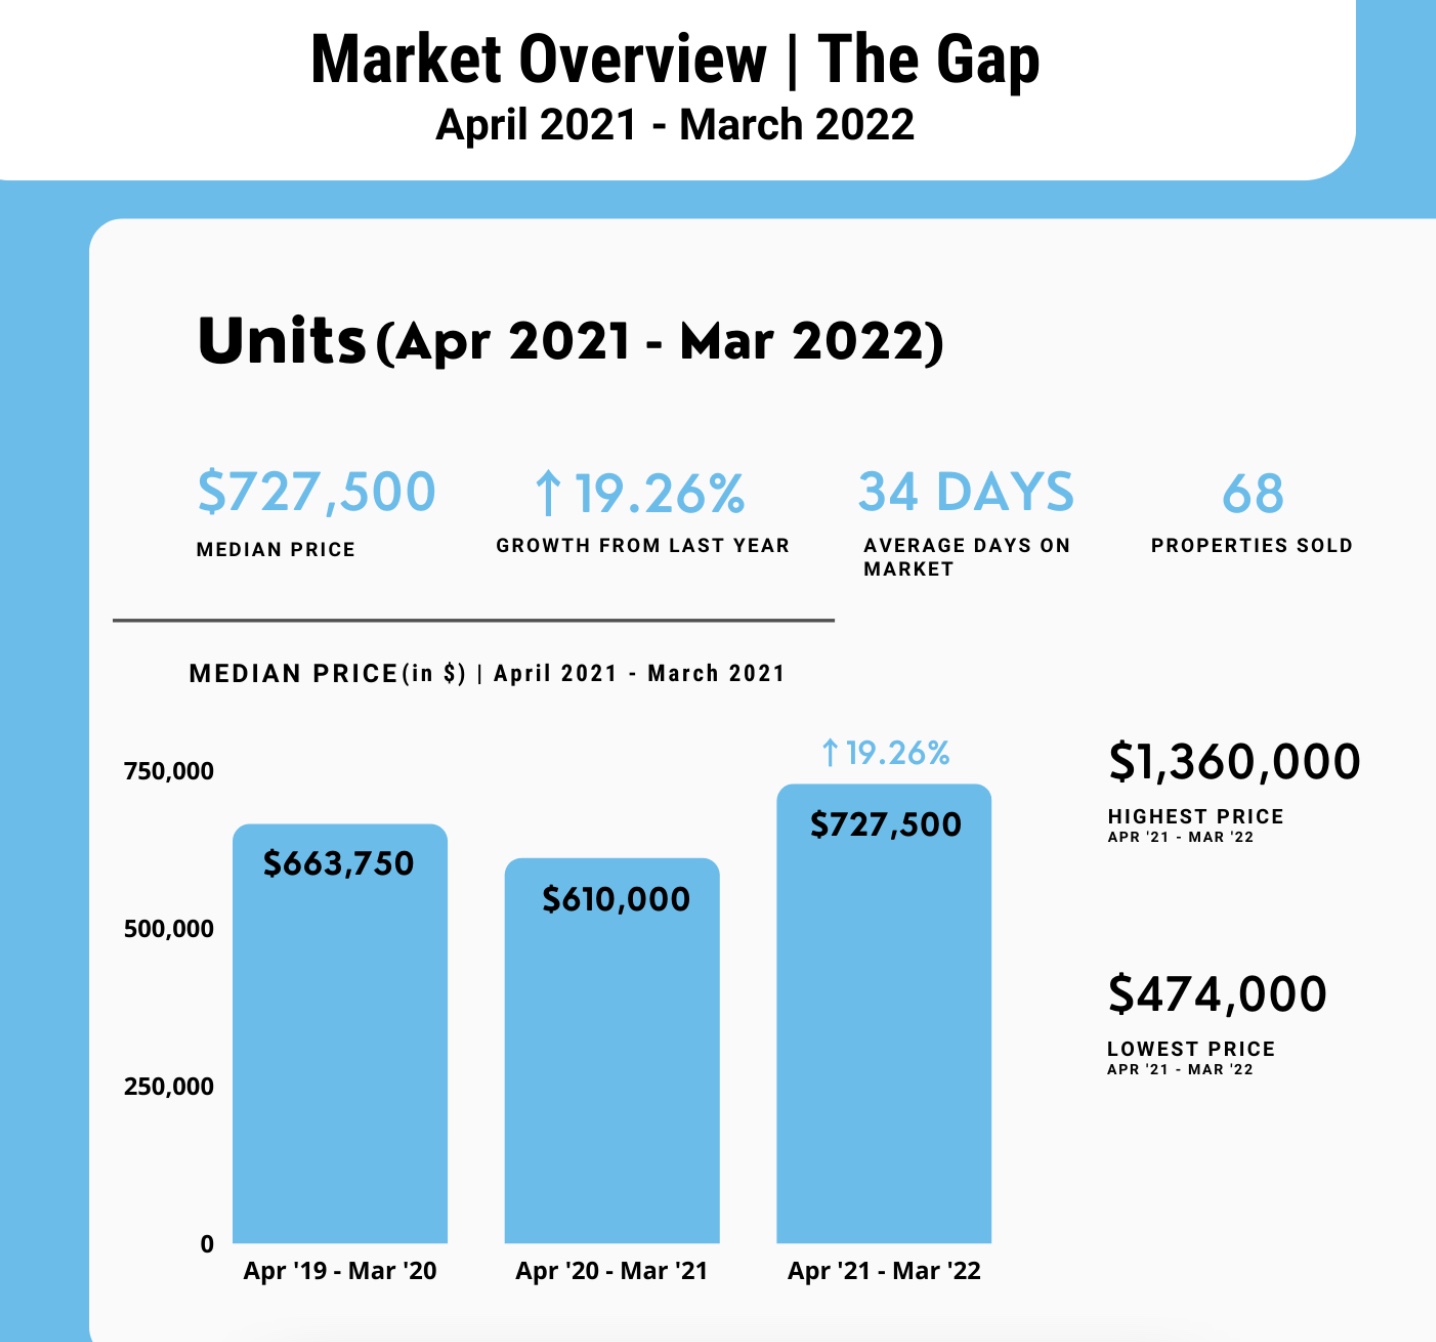 The Gap unit market